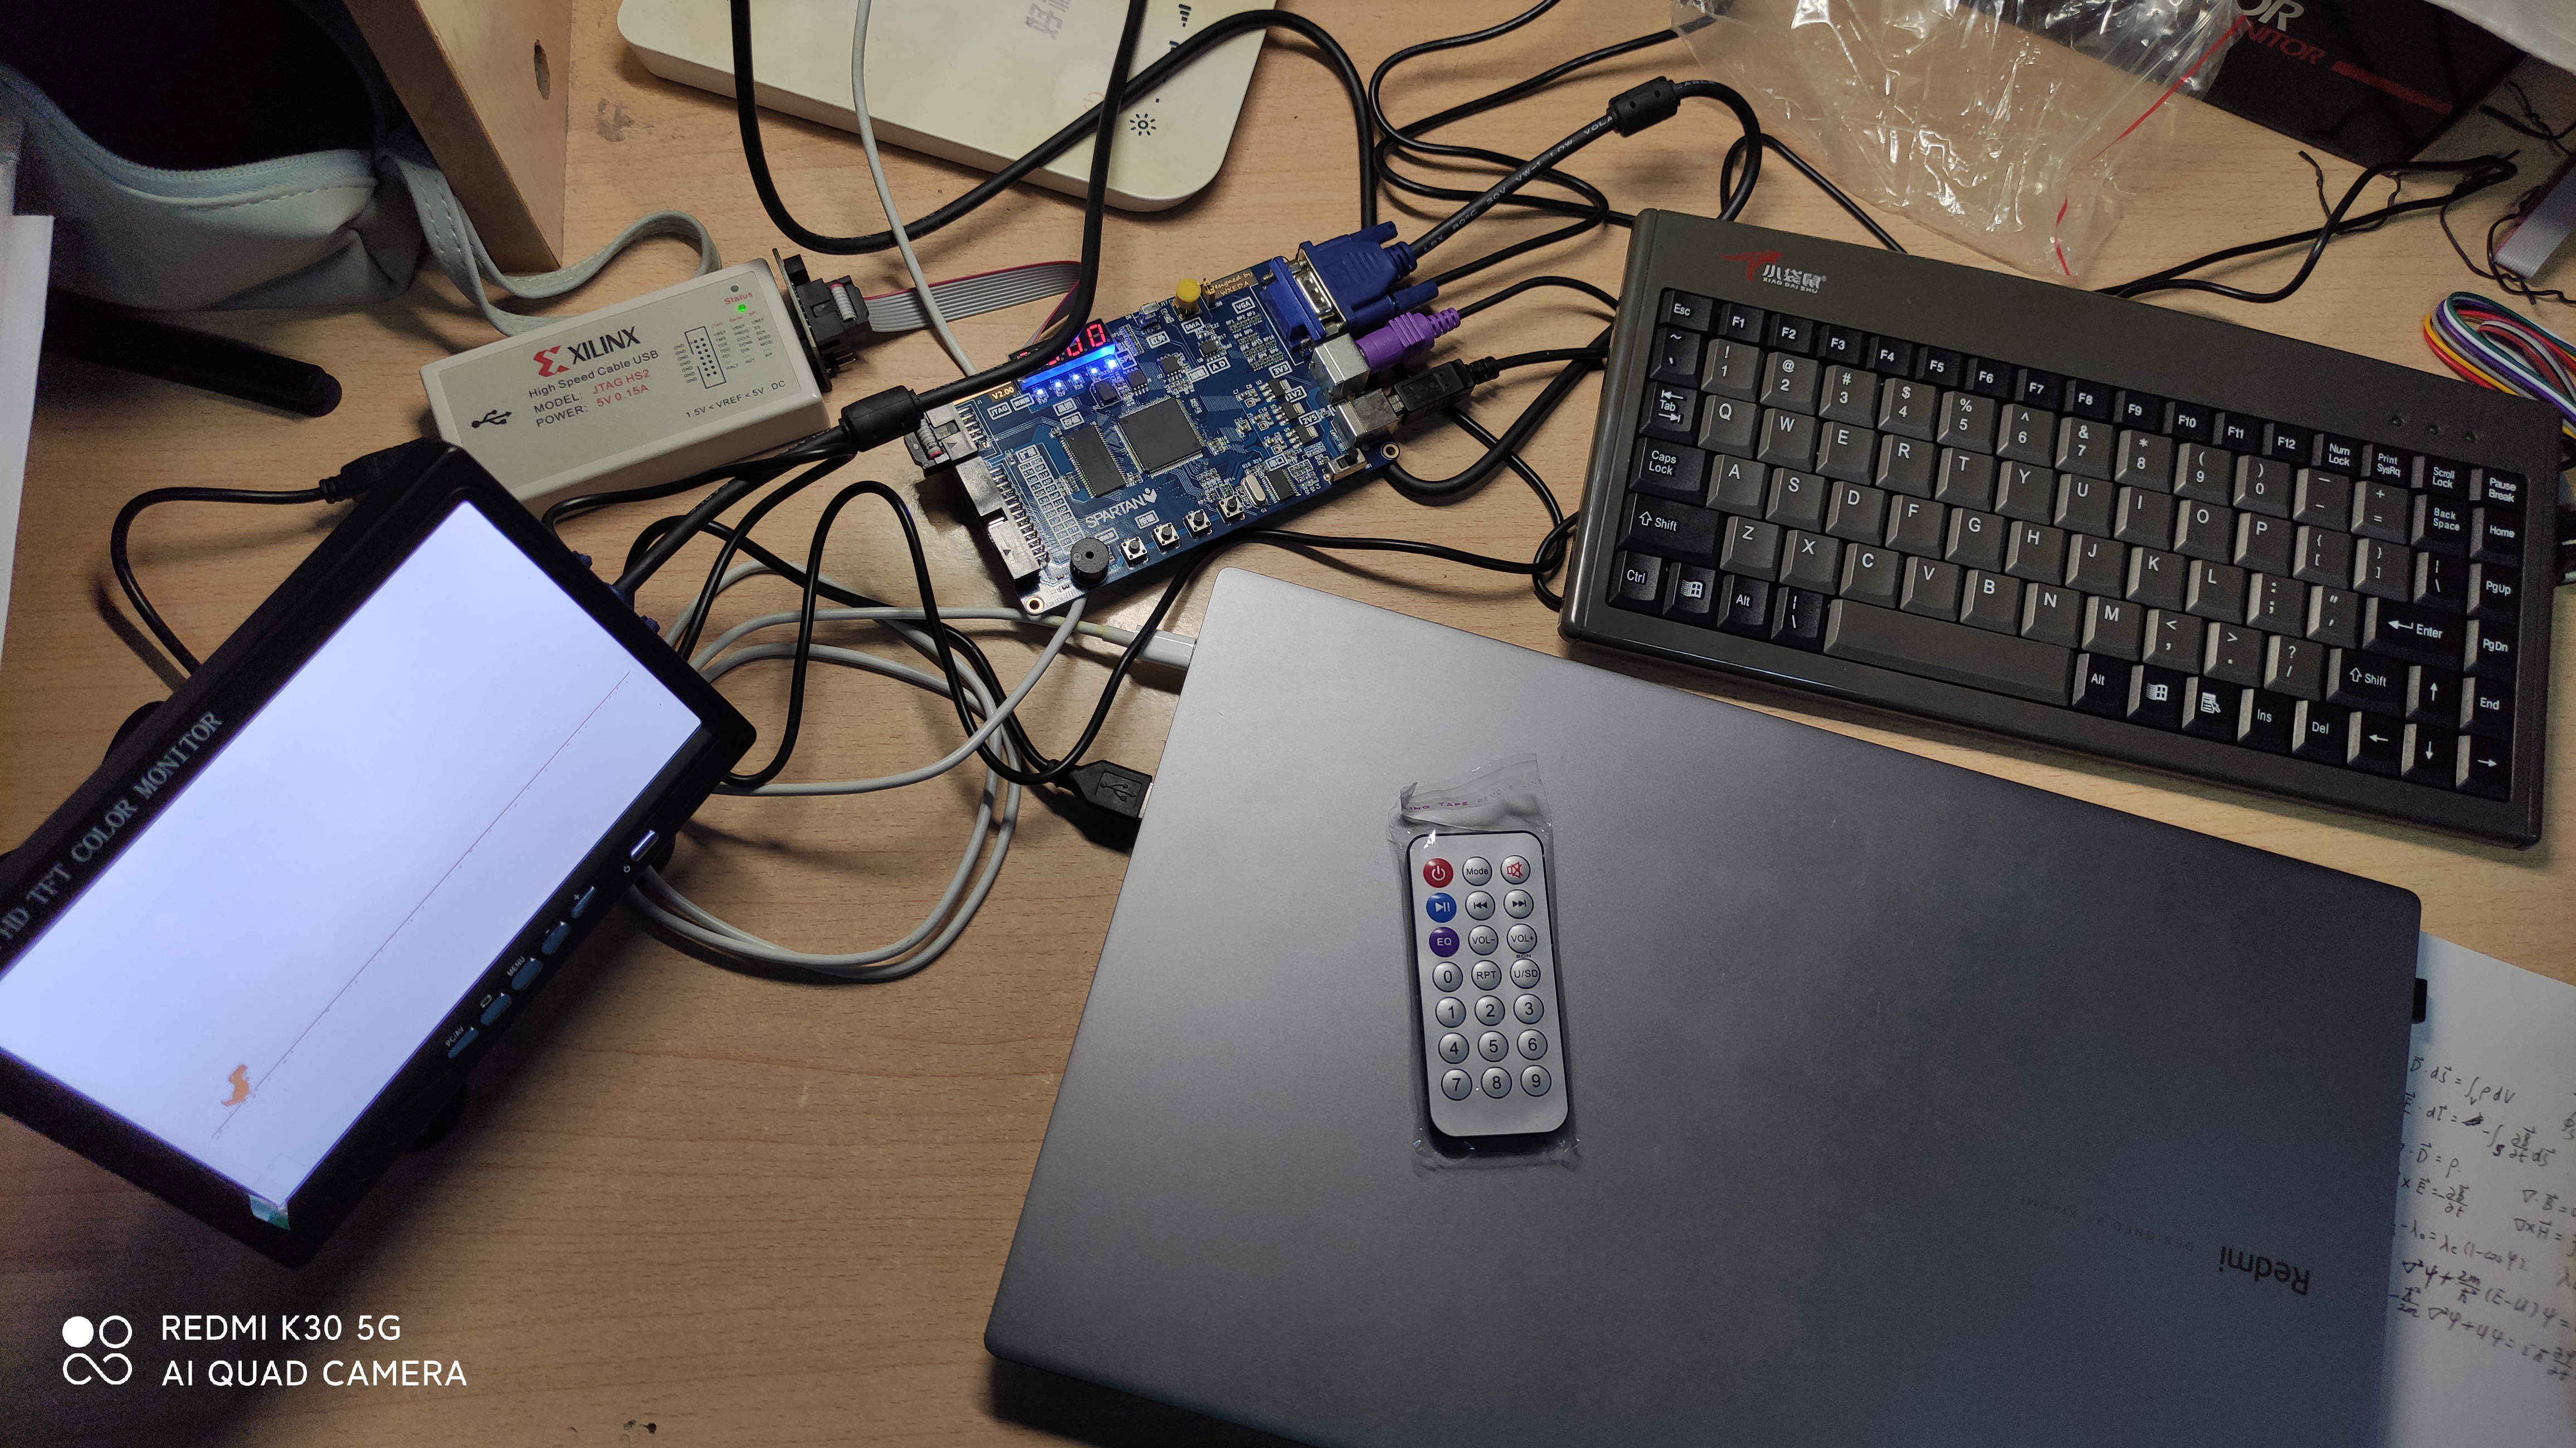 Espier 3 开发板与显示器、键盘、下载器等设备